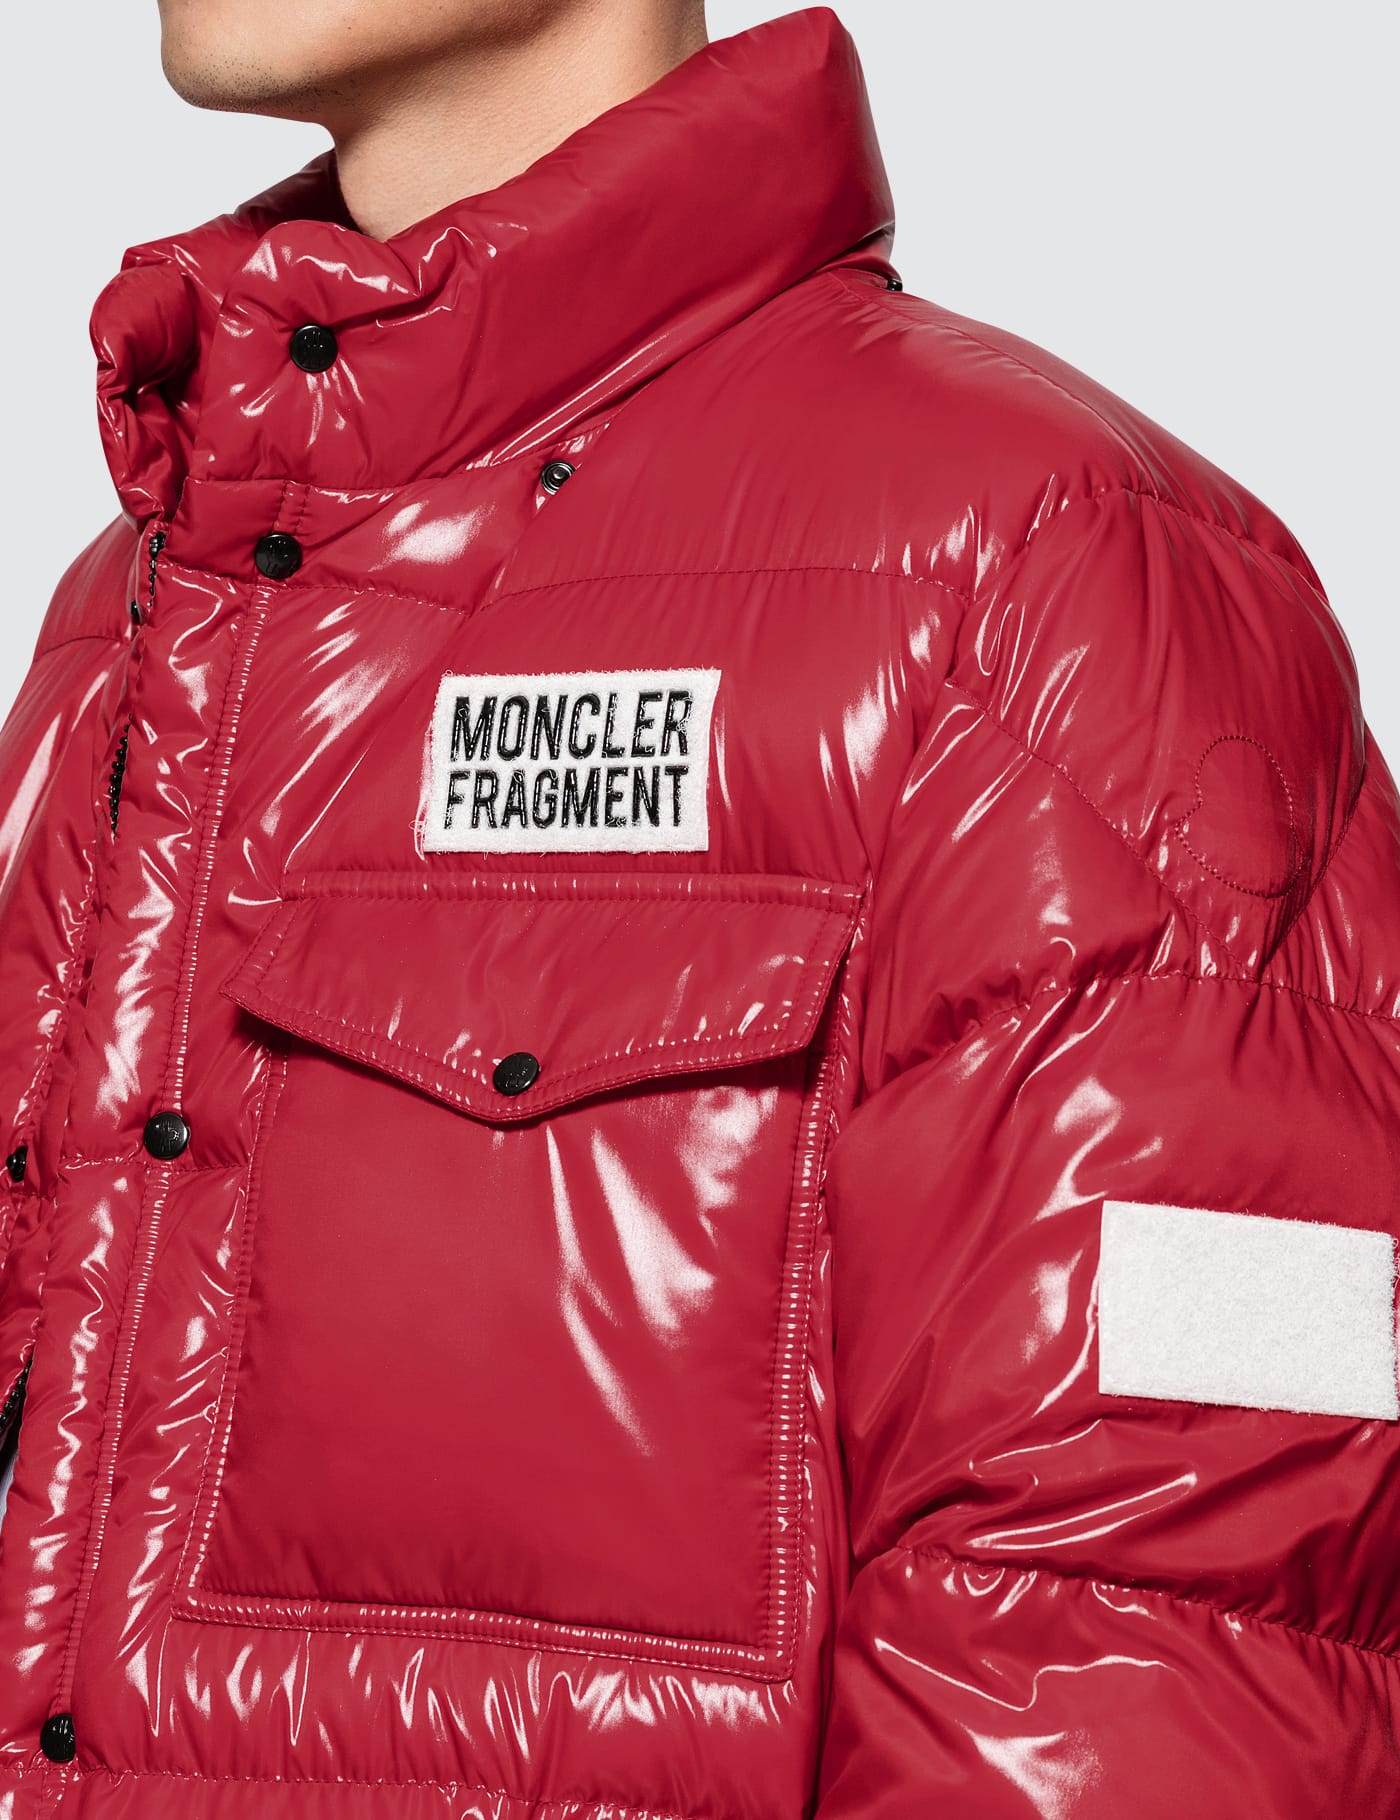 Moncler Genius - Moncler x Fragment Design Anthem Jacket | HBX 